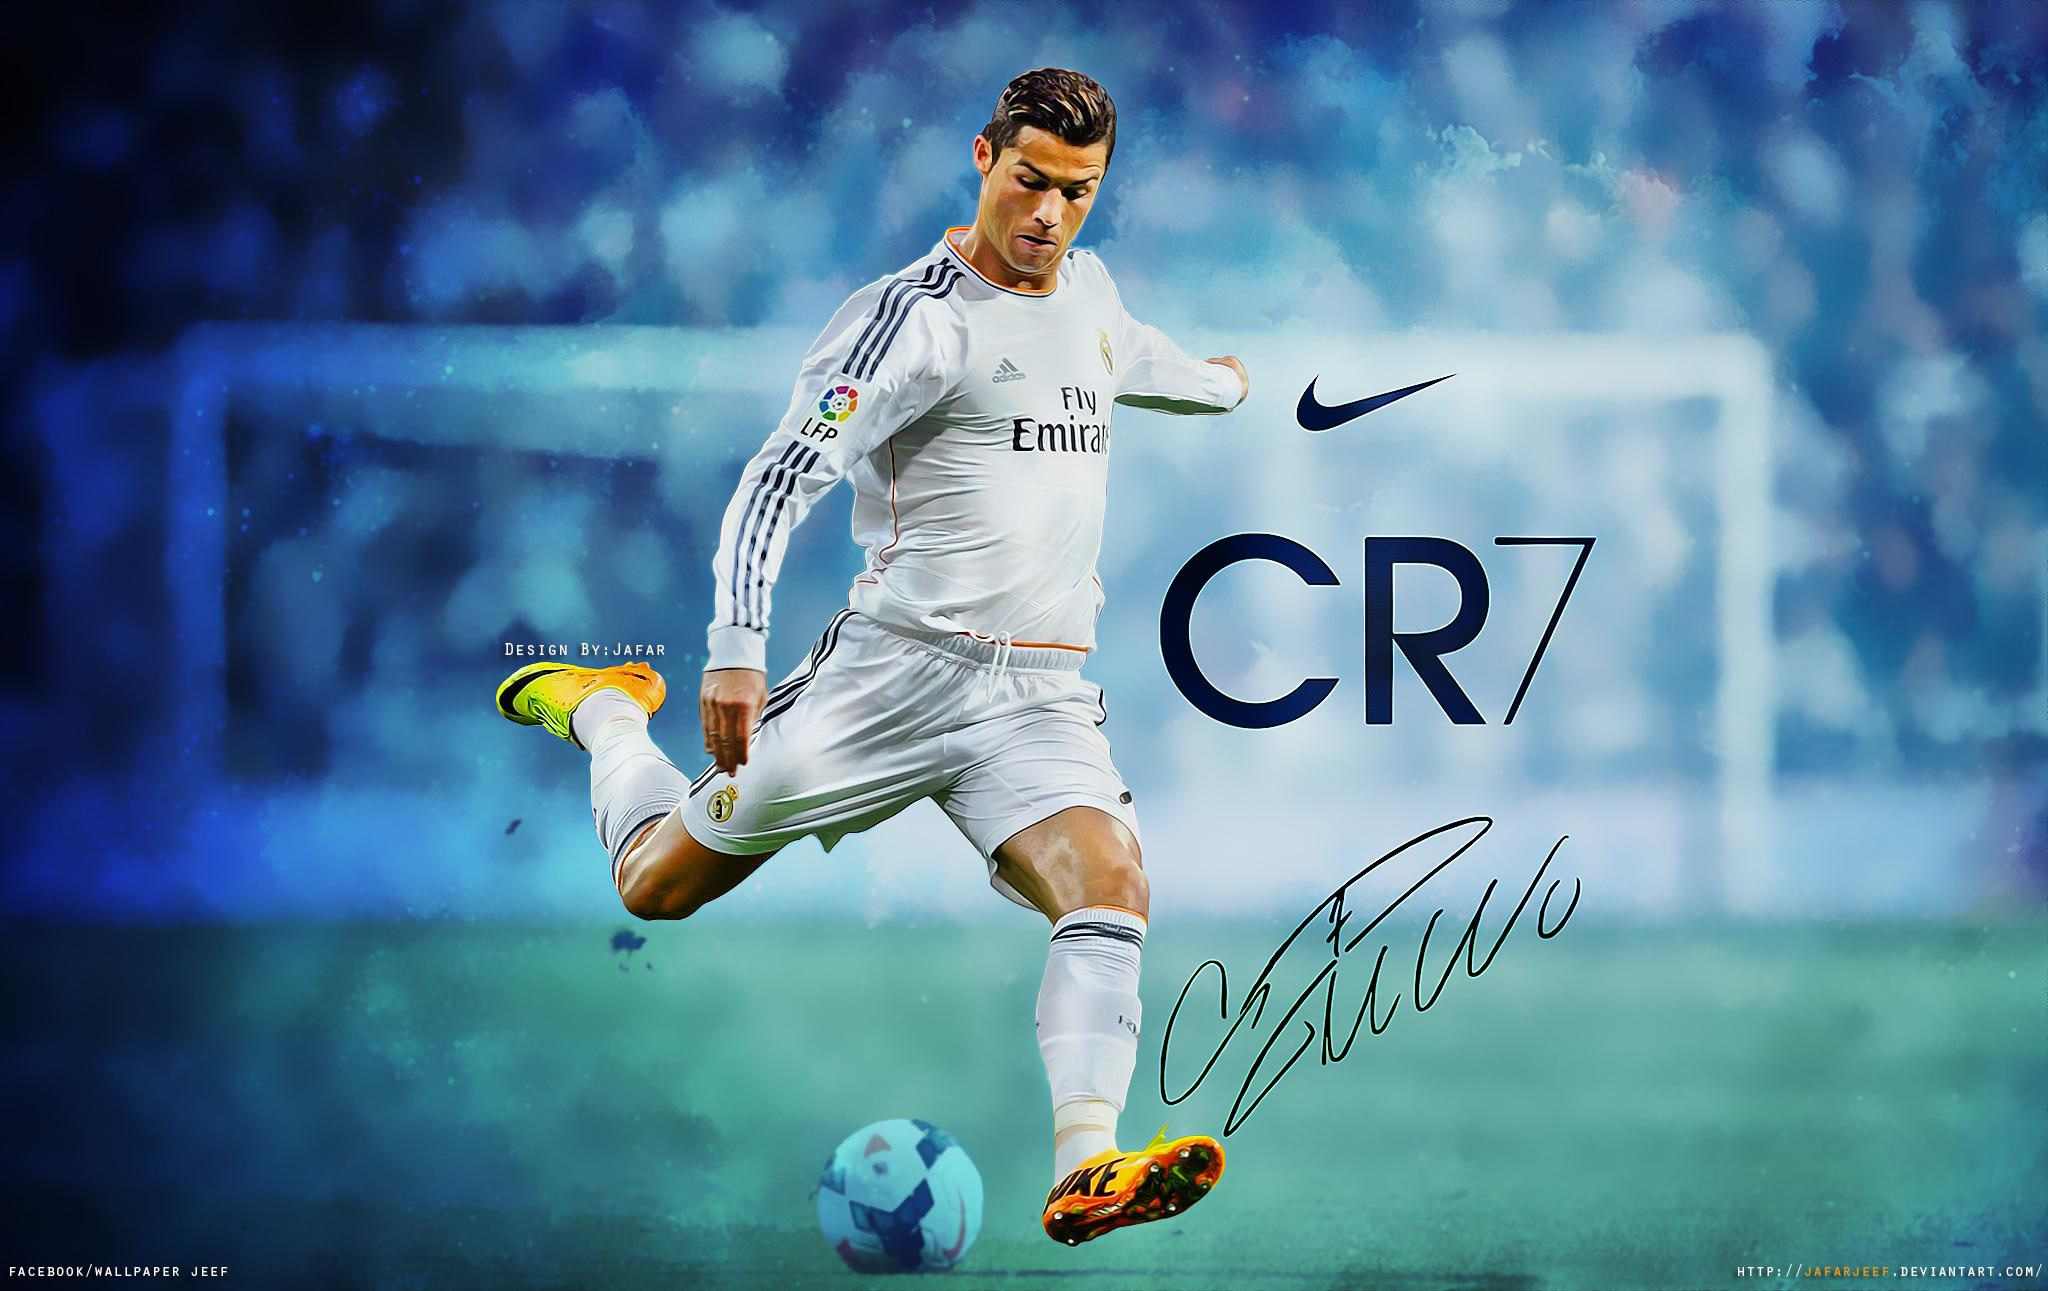 Real Madrid star Cristiano Ronaldo will open his CR7 footwear brand in Alexandria